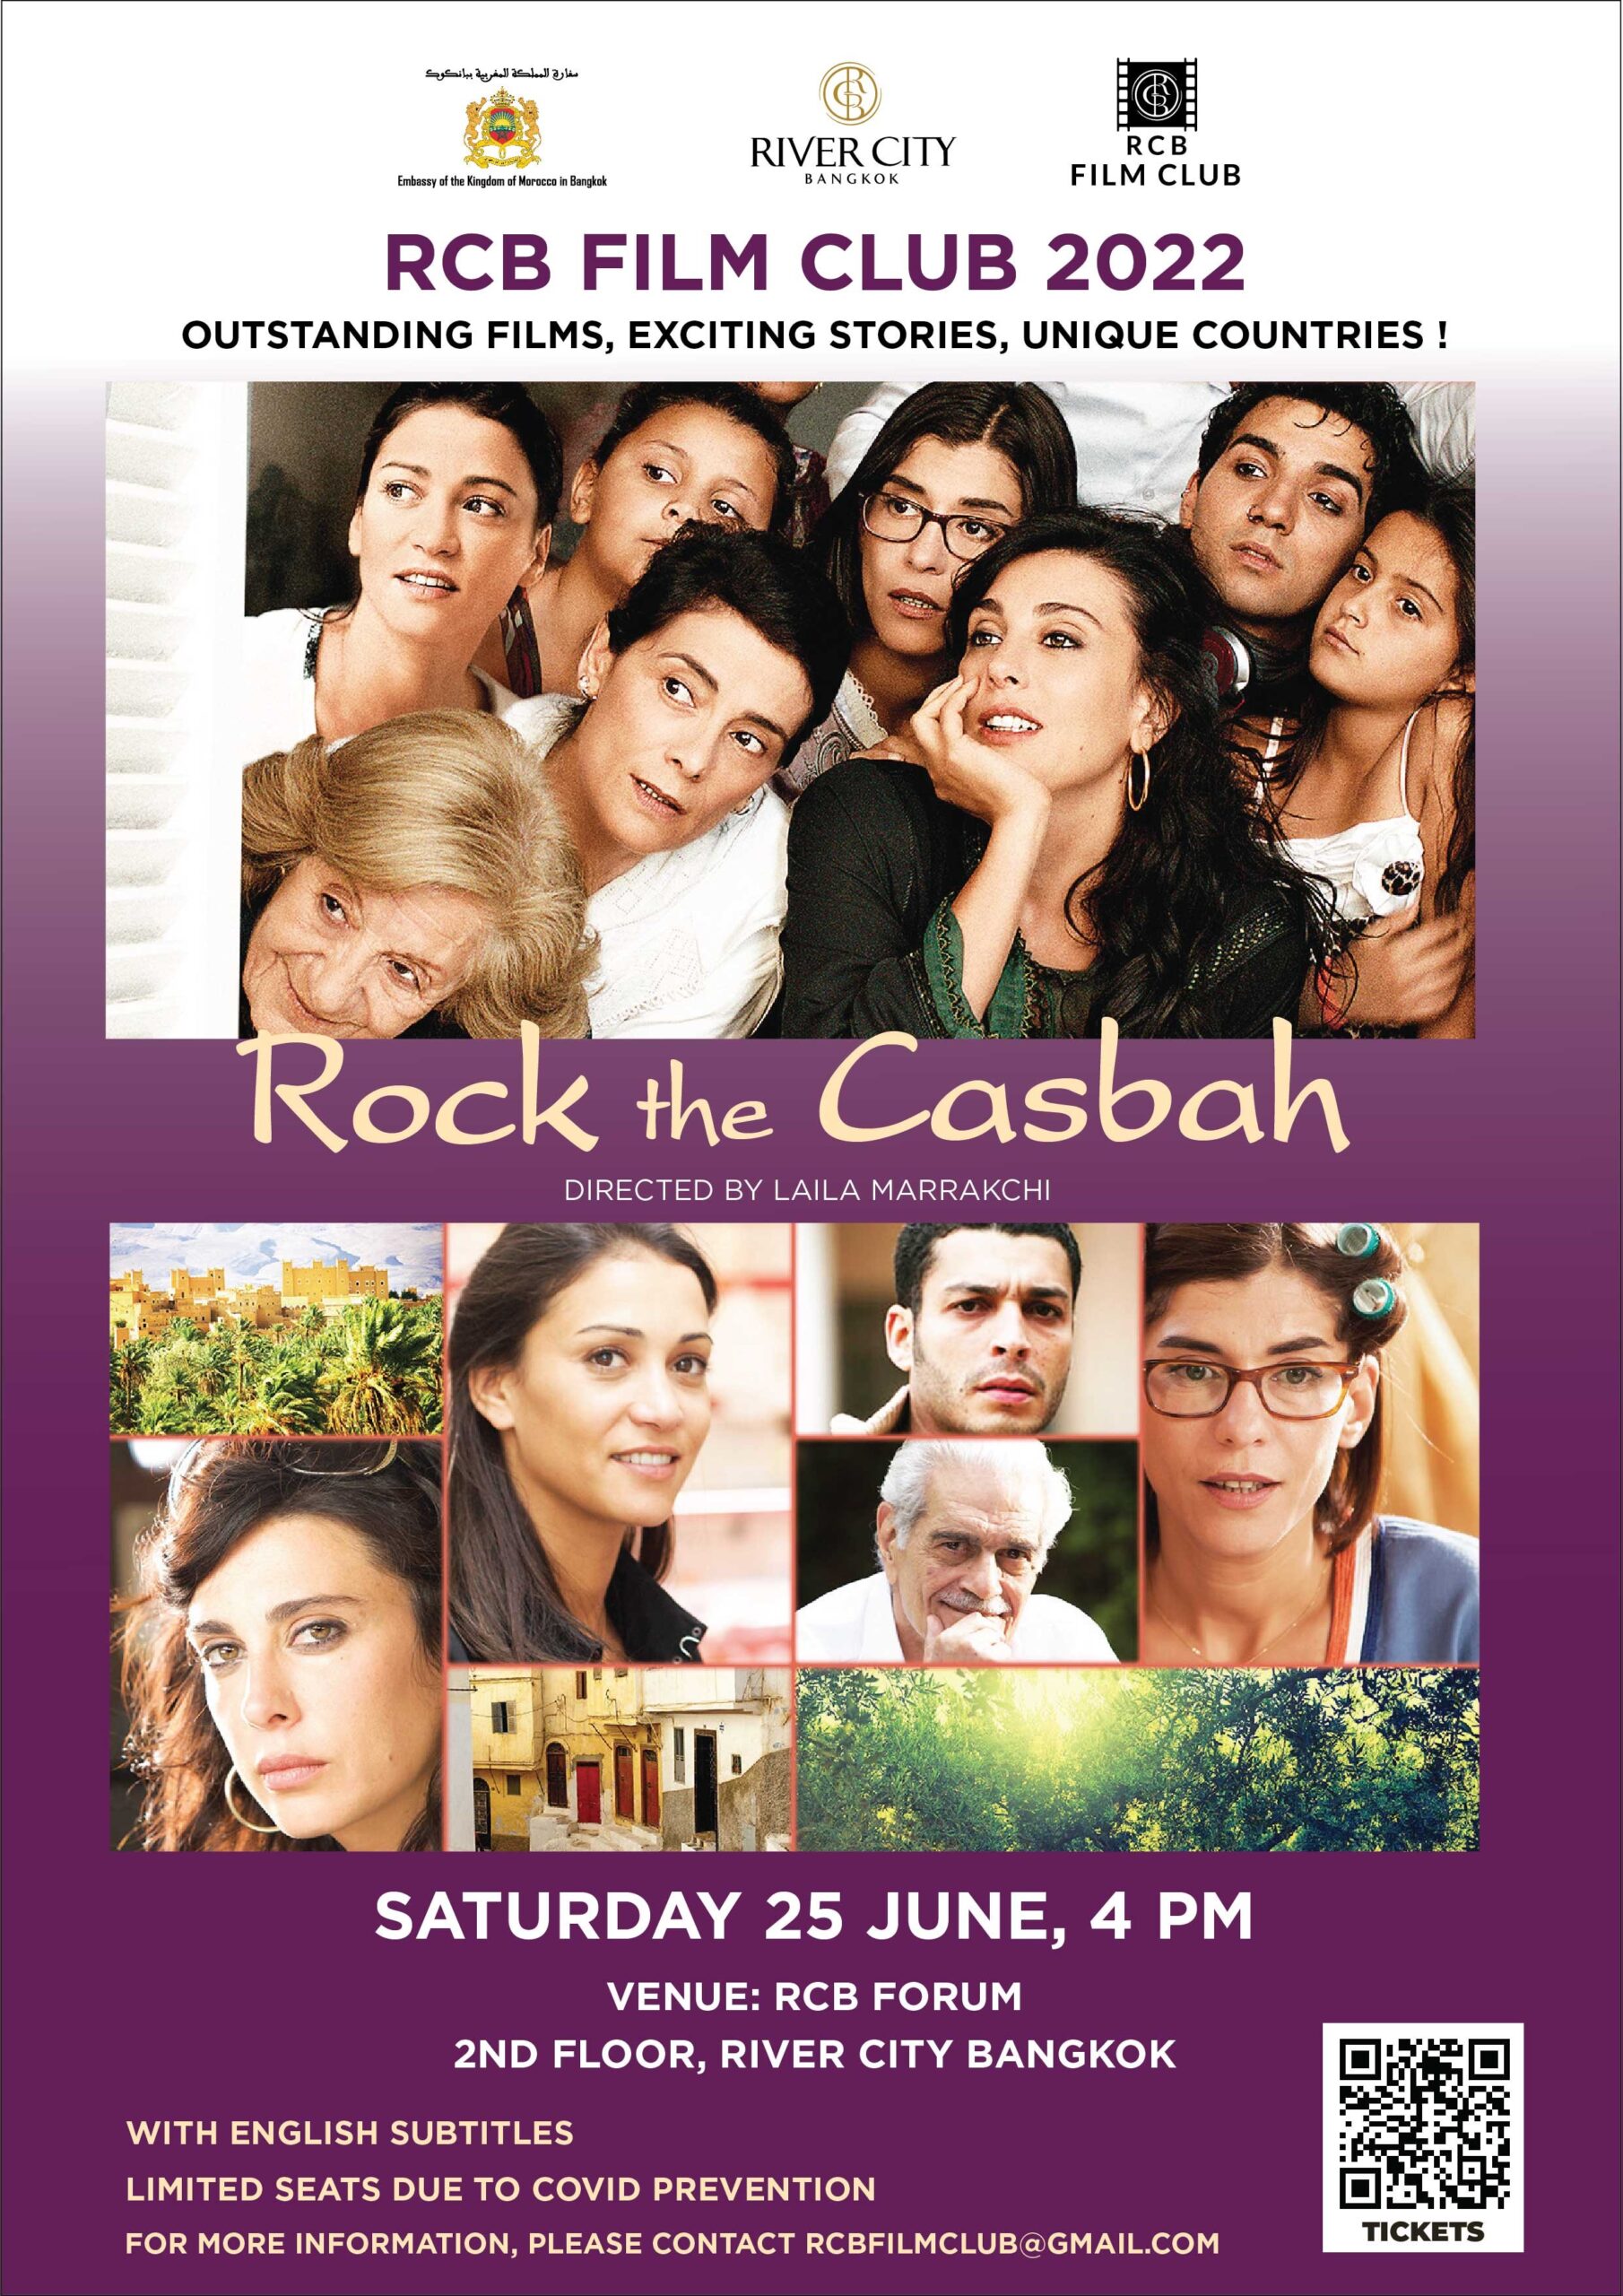 RCB Film Club’s movie in JUNE-‘ ROCK THE CASBAH’, Morocco, Sat 25 June, 4:00 pm